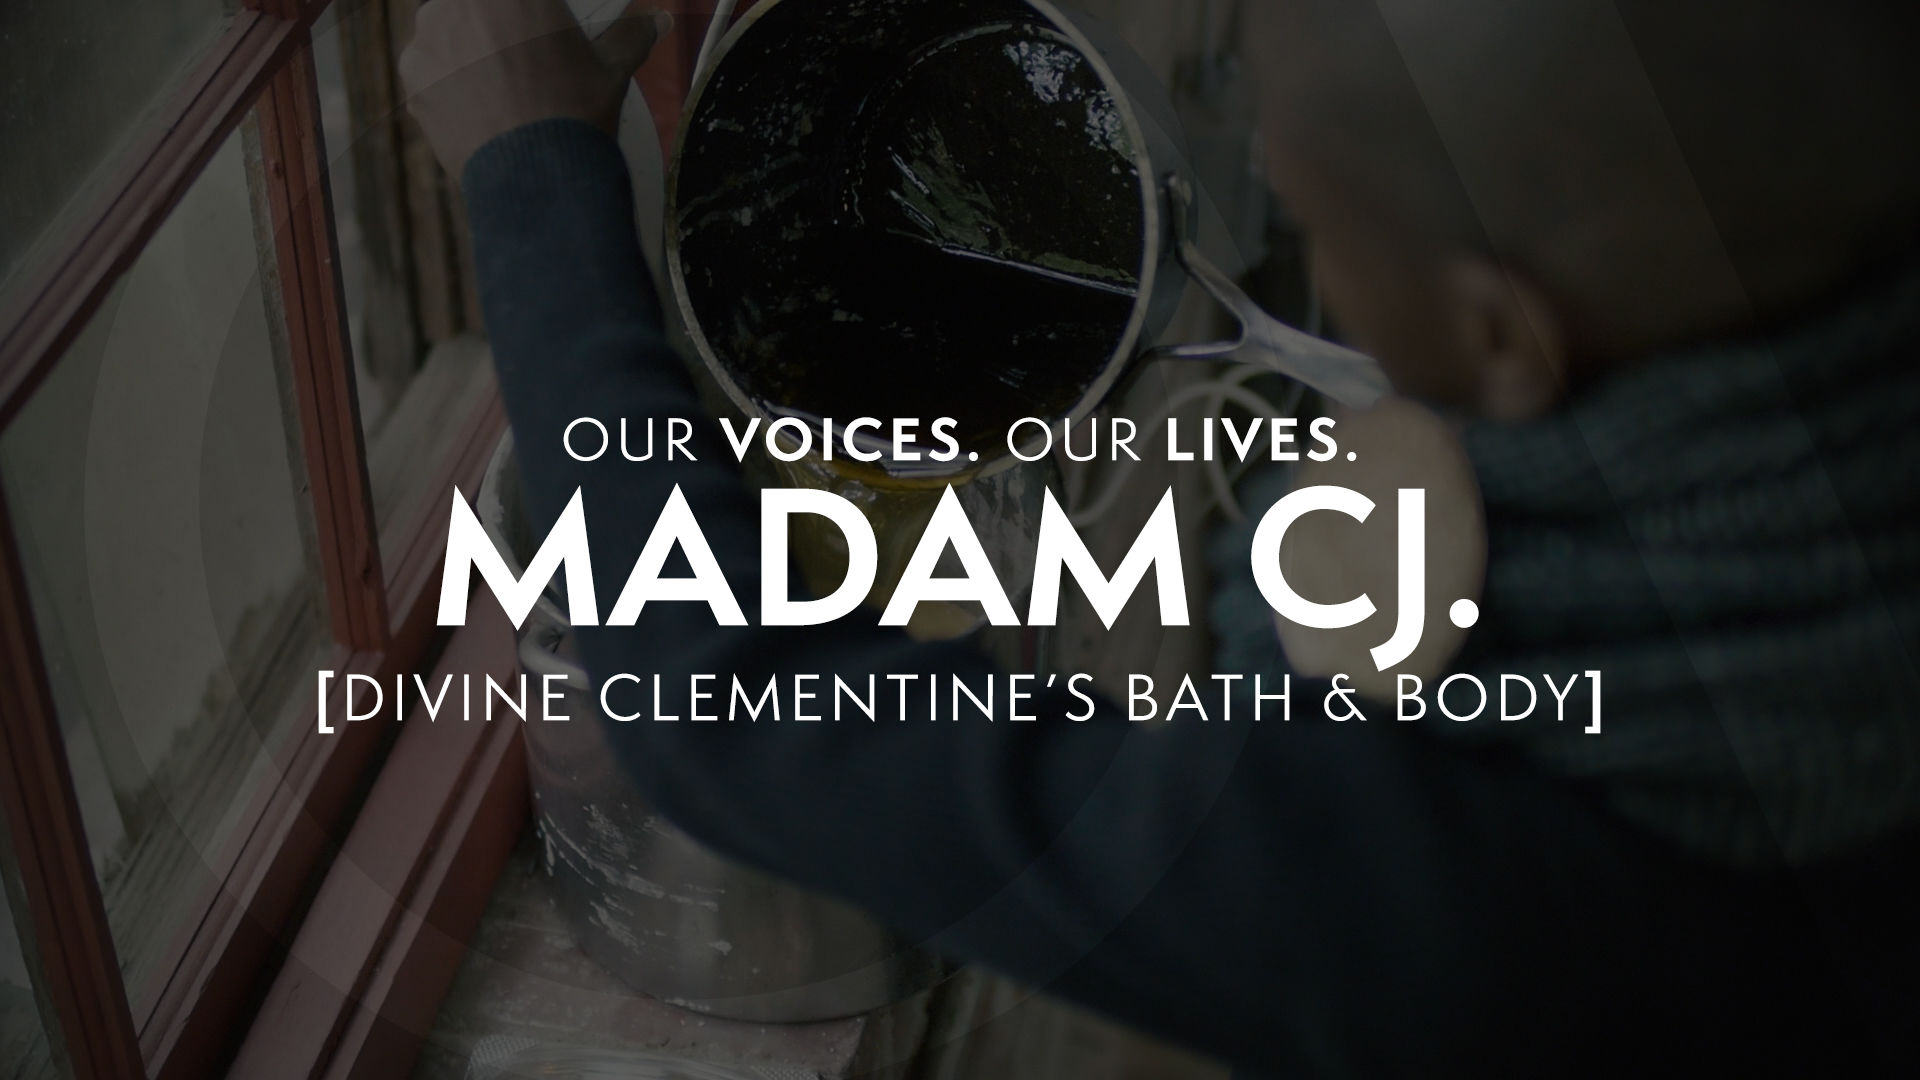 Our Voices. Our Lives. presents MADAM CJ.